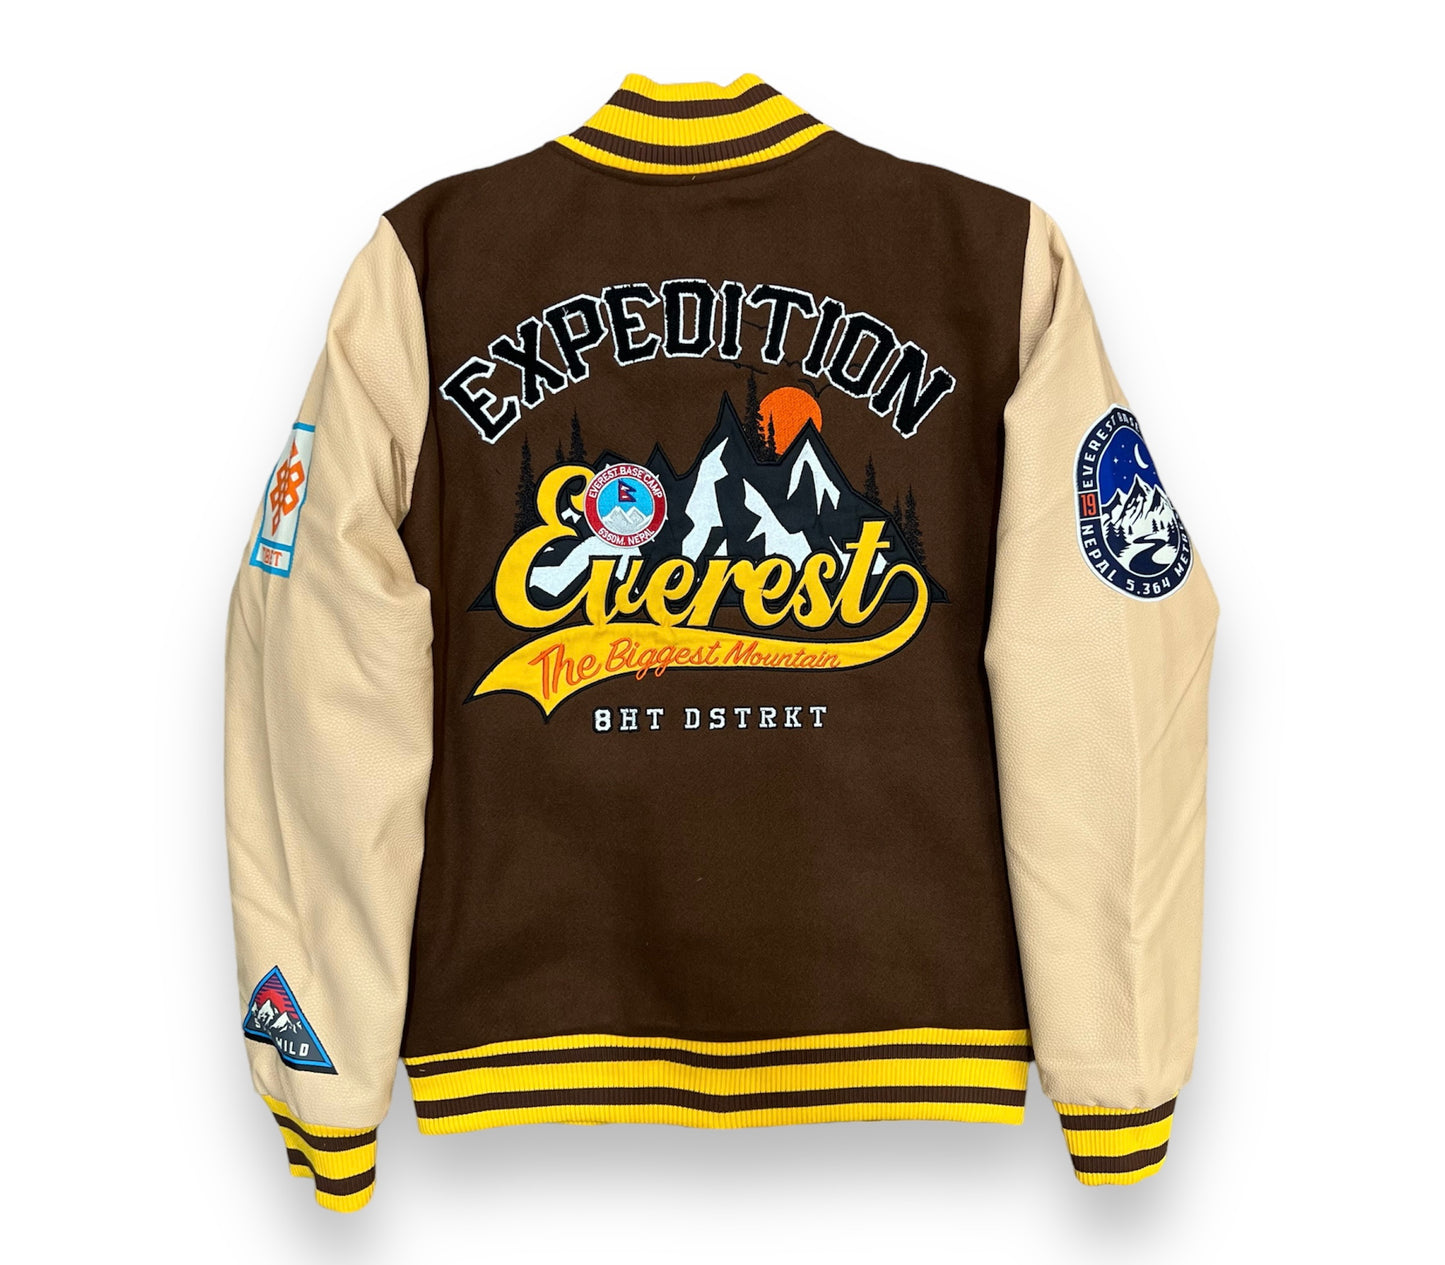 8ight Dstrkt Expedition Everest Brown Varsity Jacket